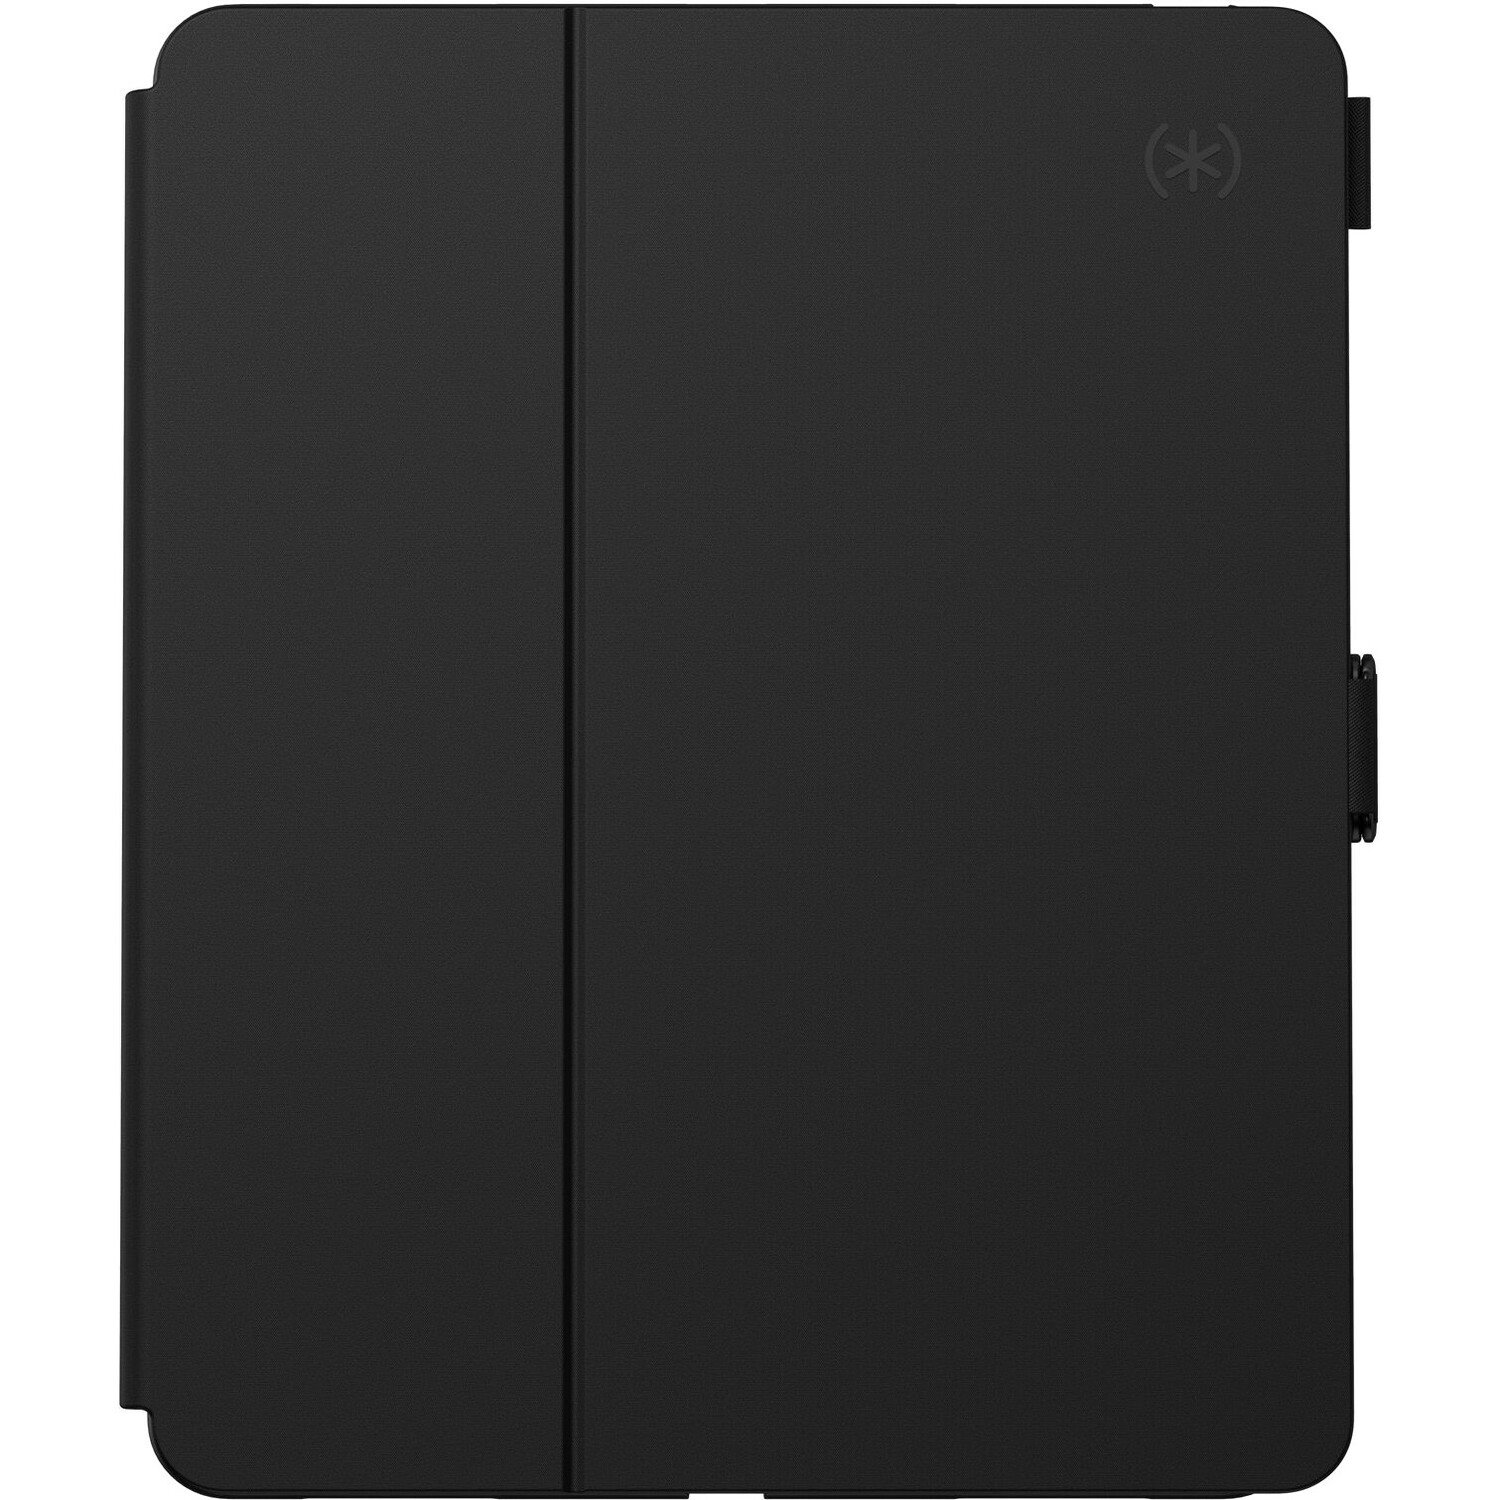 Speck Balance Folio Carrying Case (Folio) for 27.9 cm (11") Apple iPad Pro Tablet - Black